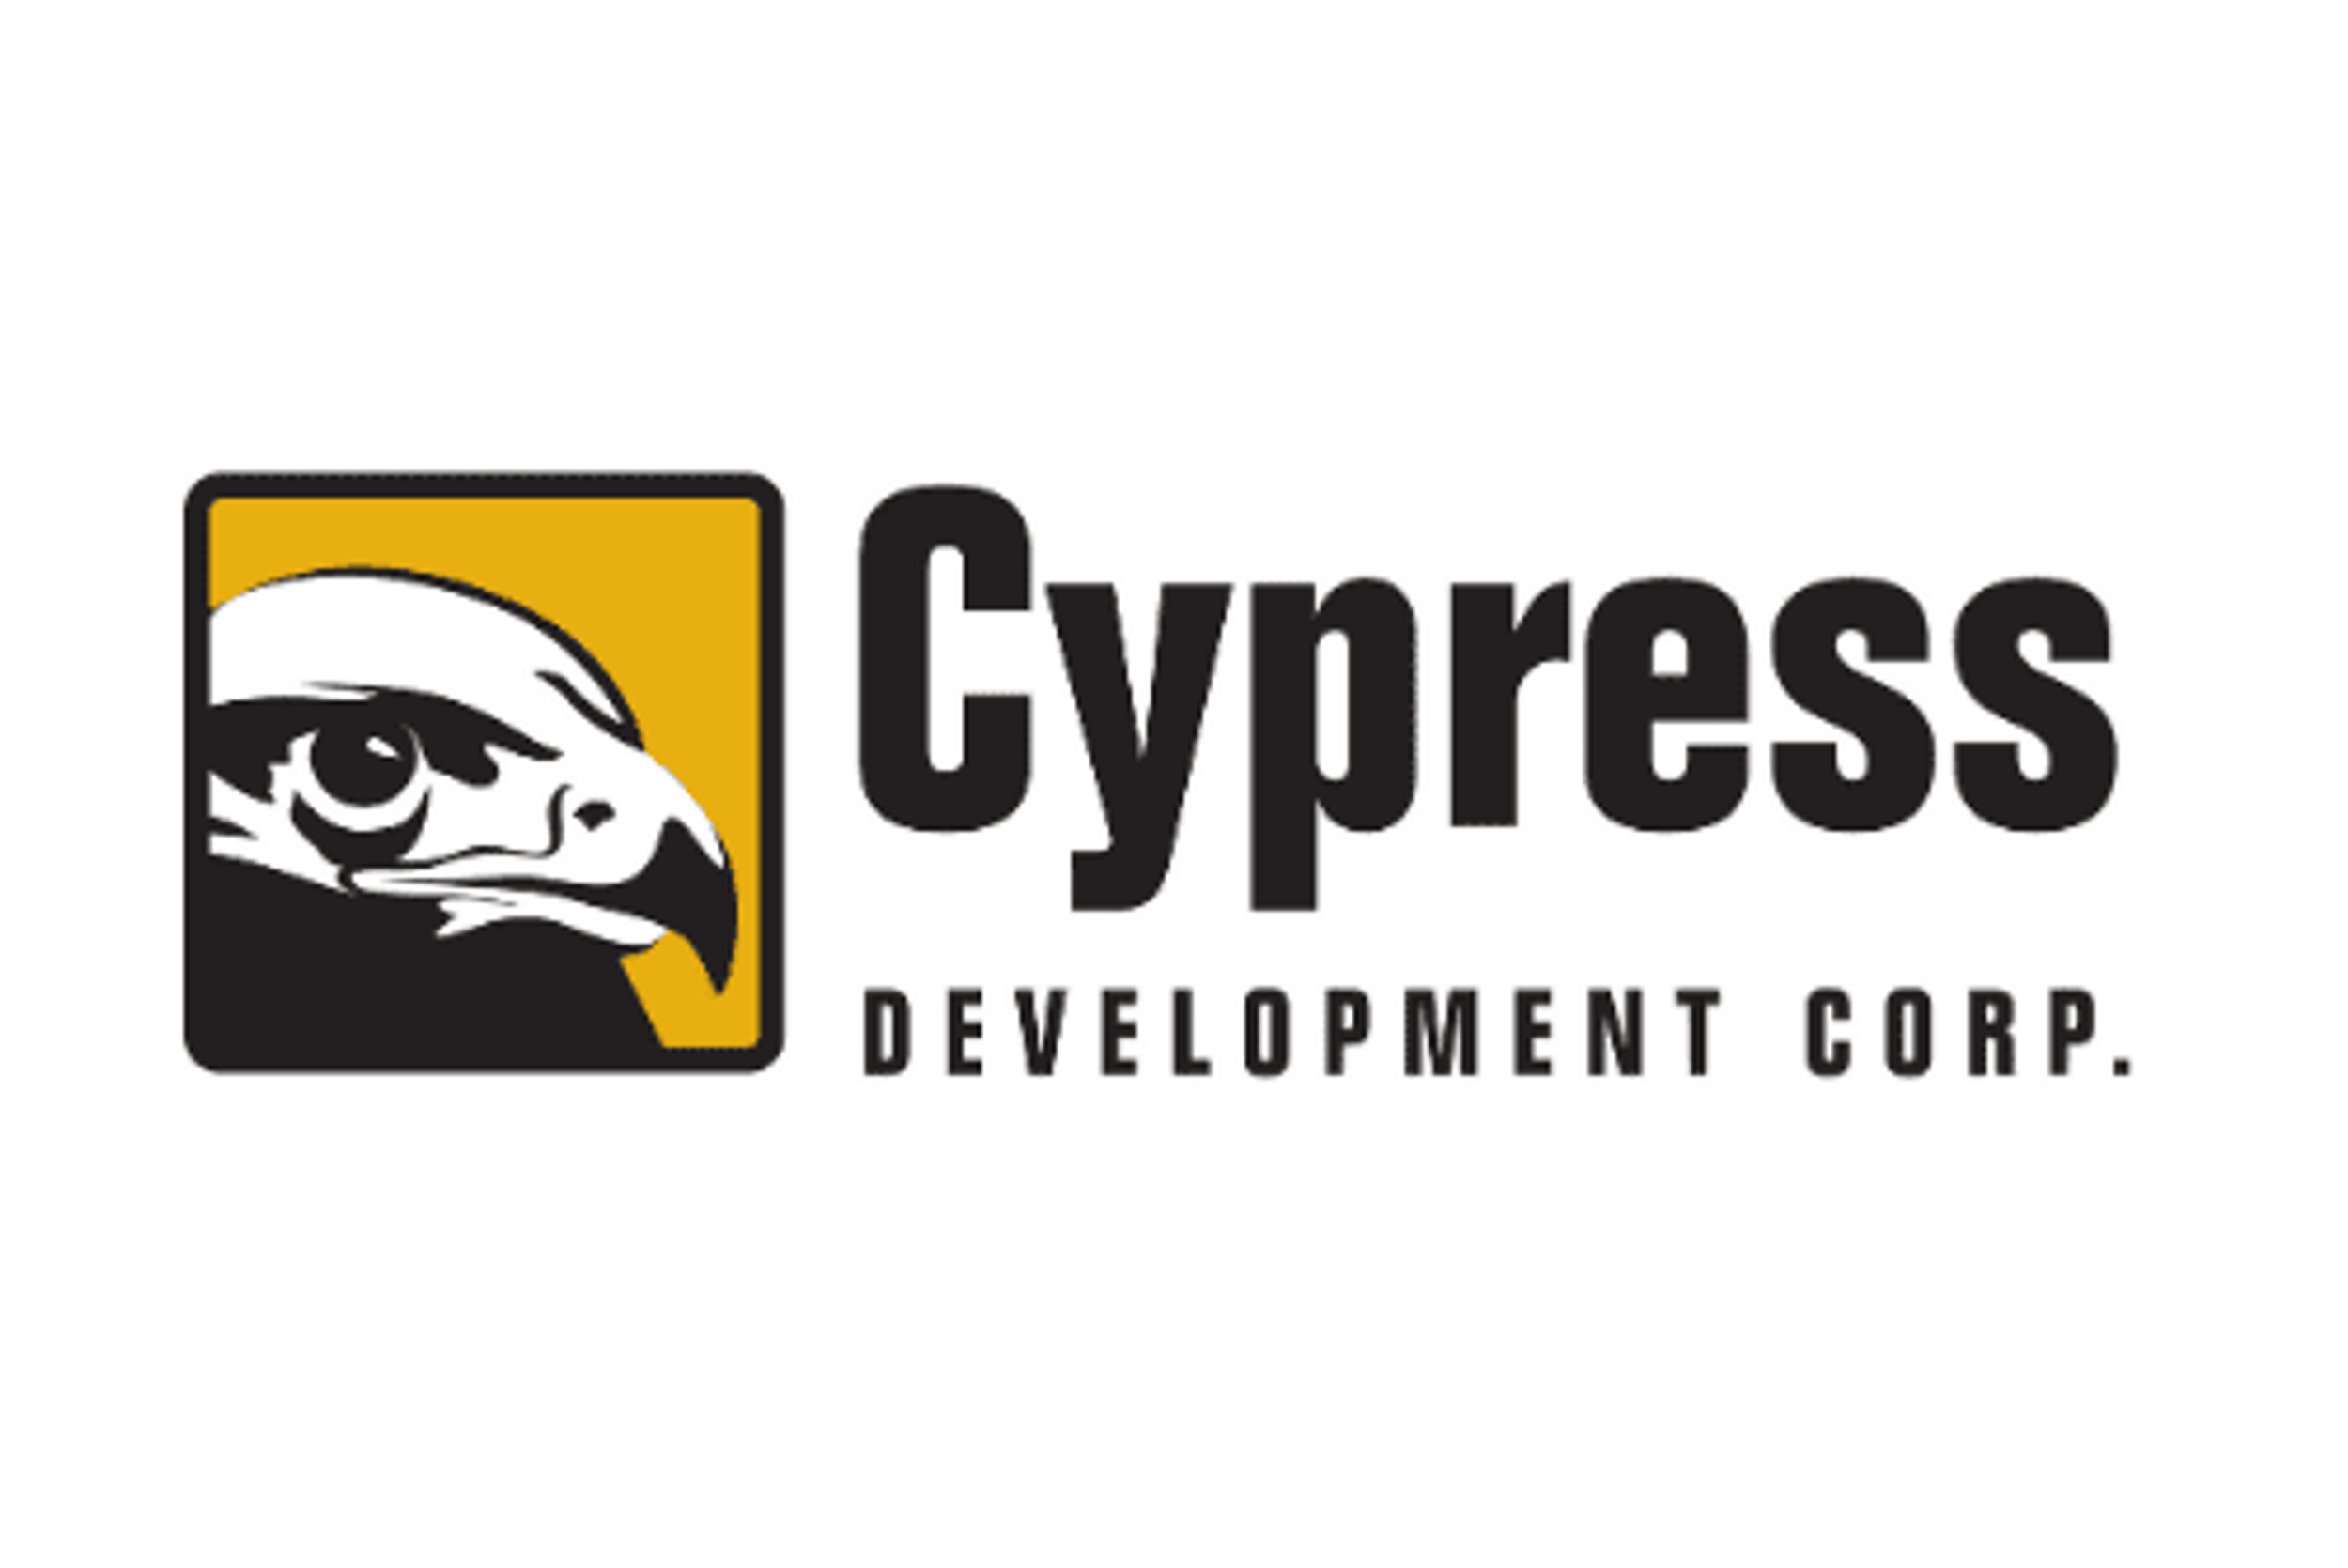 cypress development corp stock price